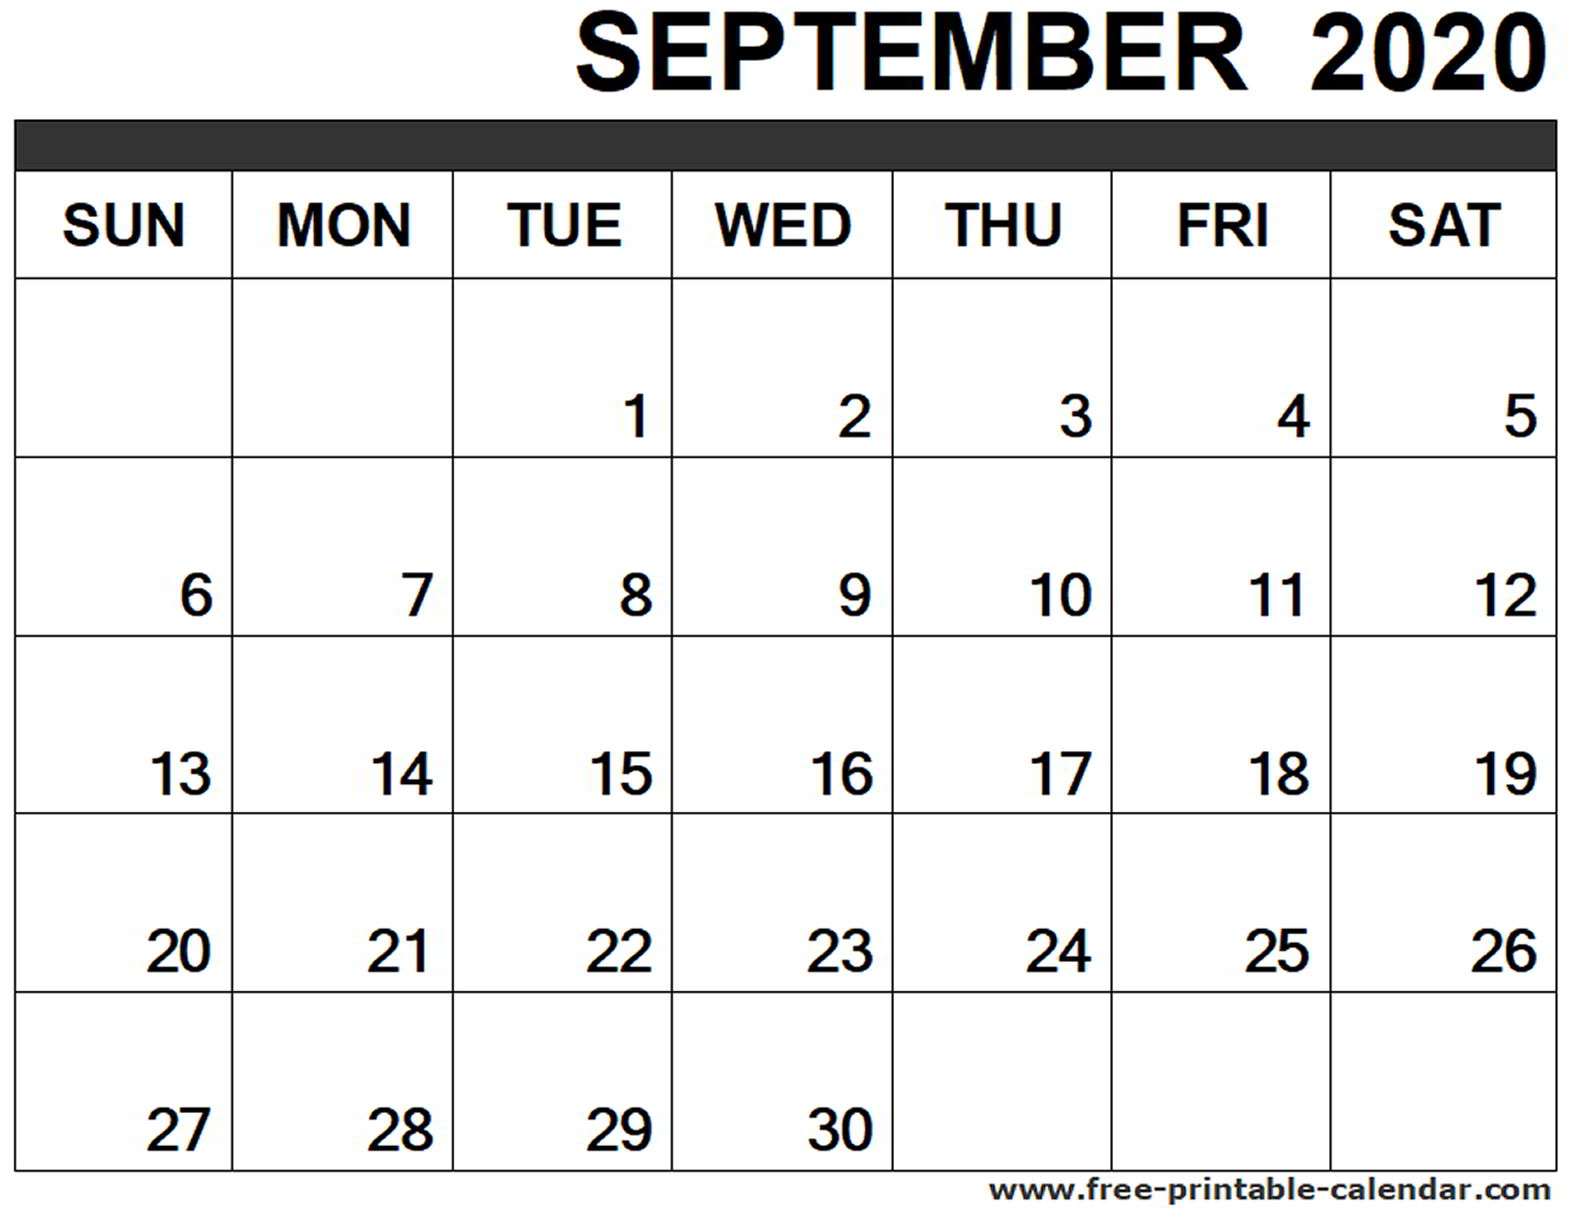 September 2020 Calendar Printable  Freeprintablecalendar for Calender August And September 2020